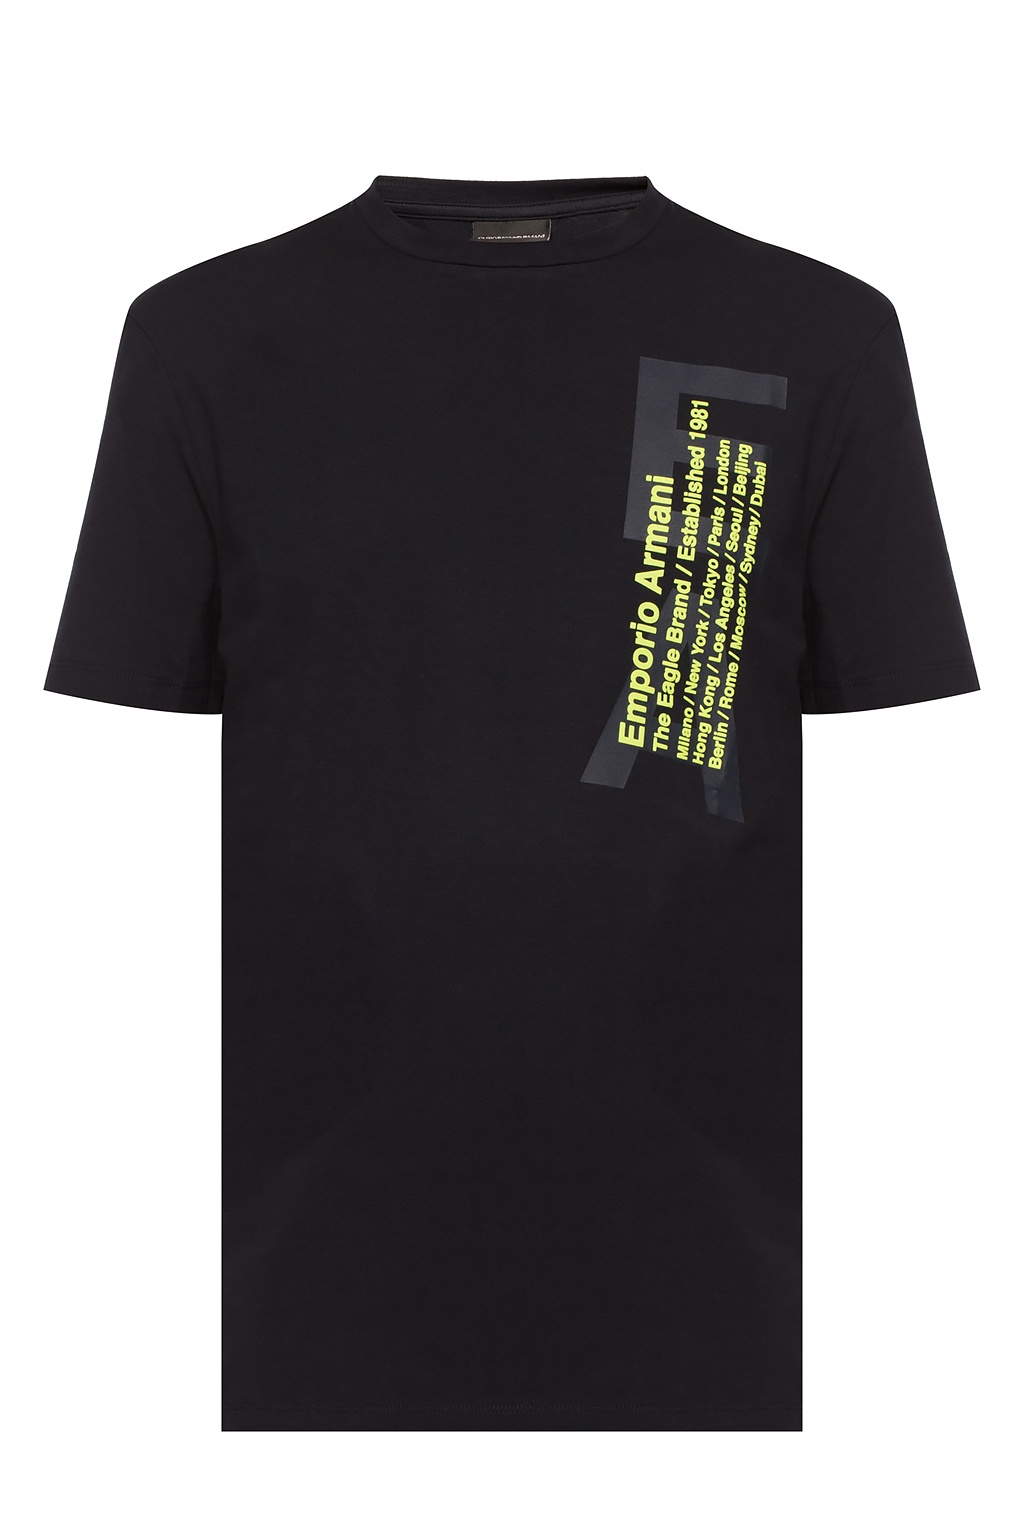 EA7 Emporio Armani Print T-shirt - nero/black 